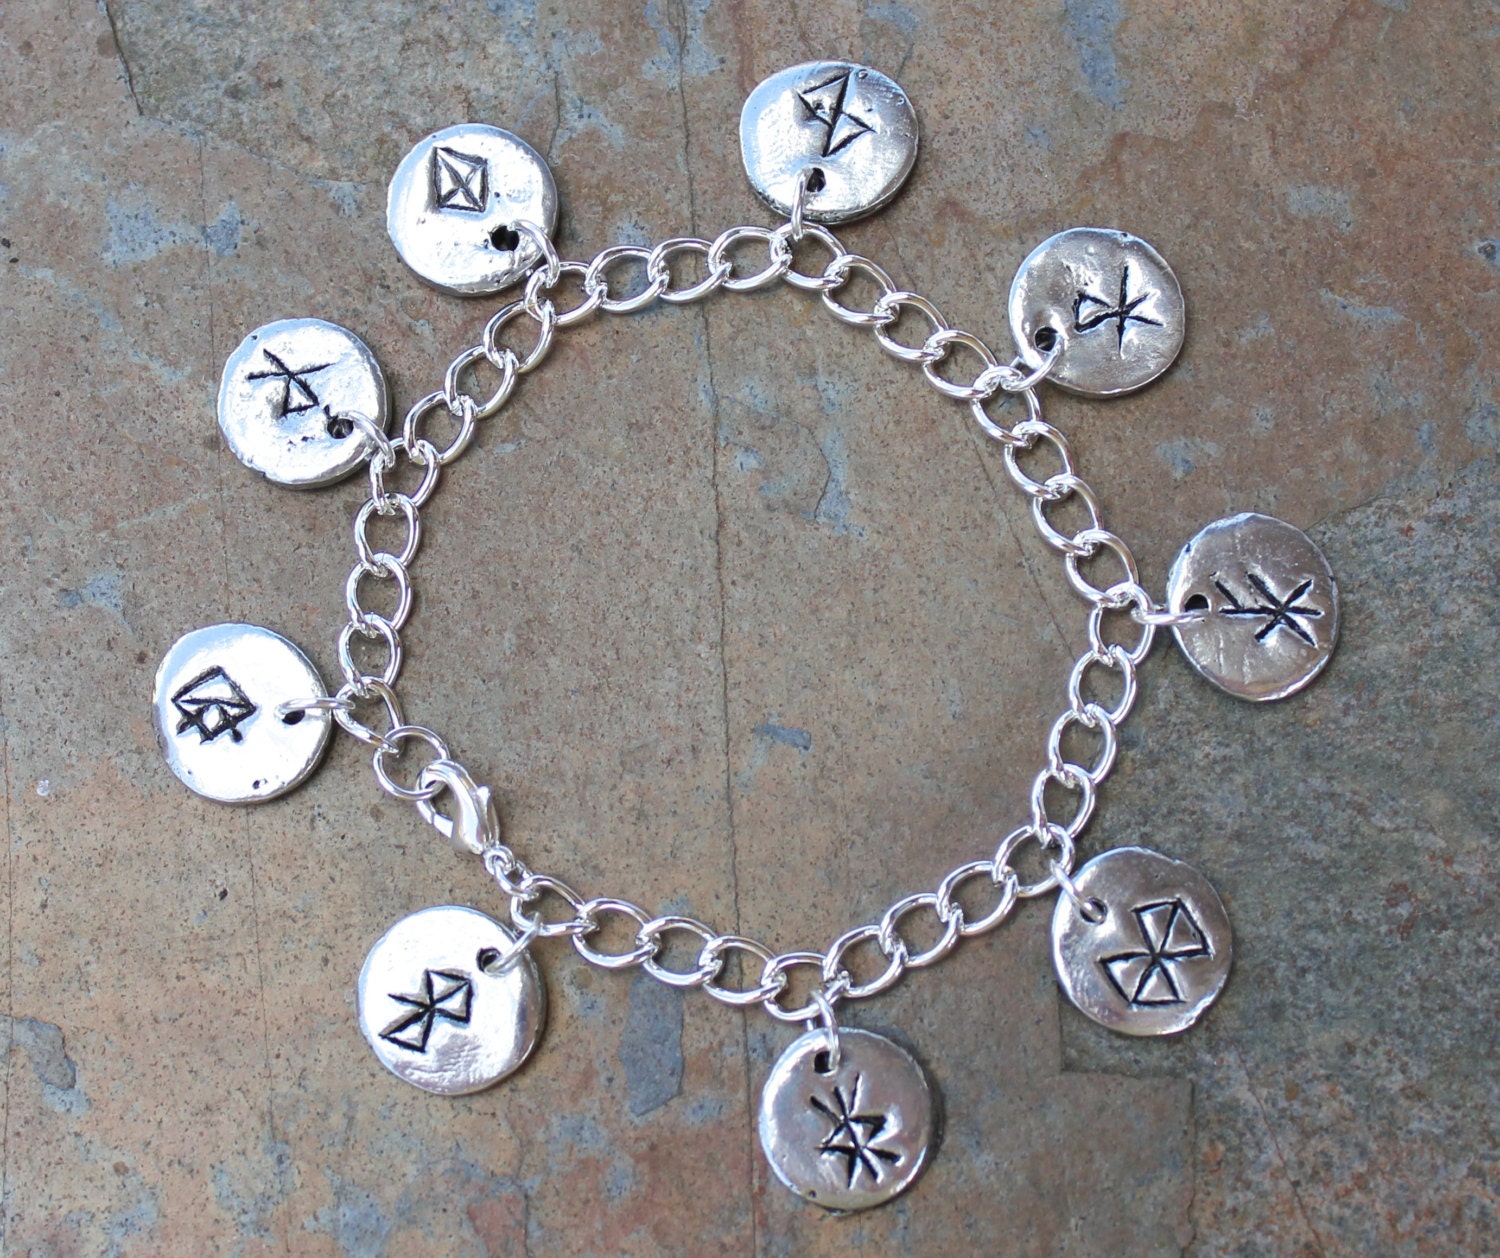 Anglo Saxon runic charm bracelet bind runes chunky silver